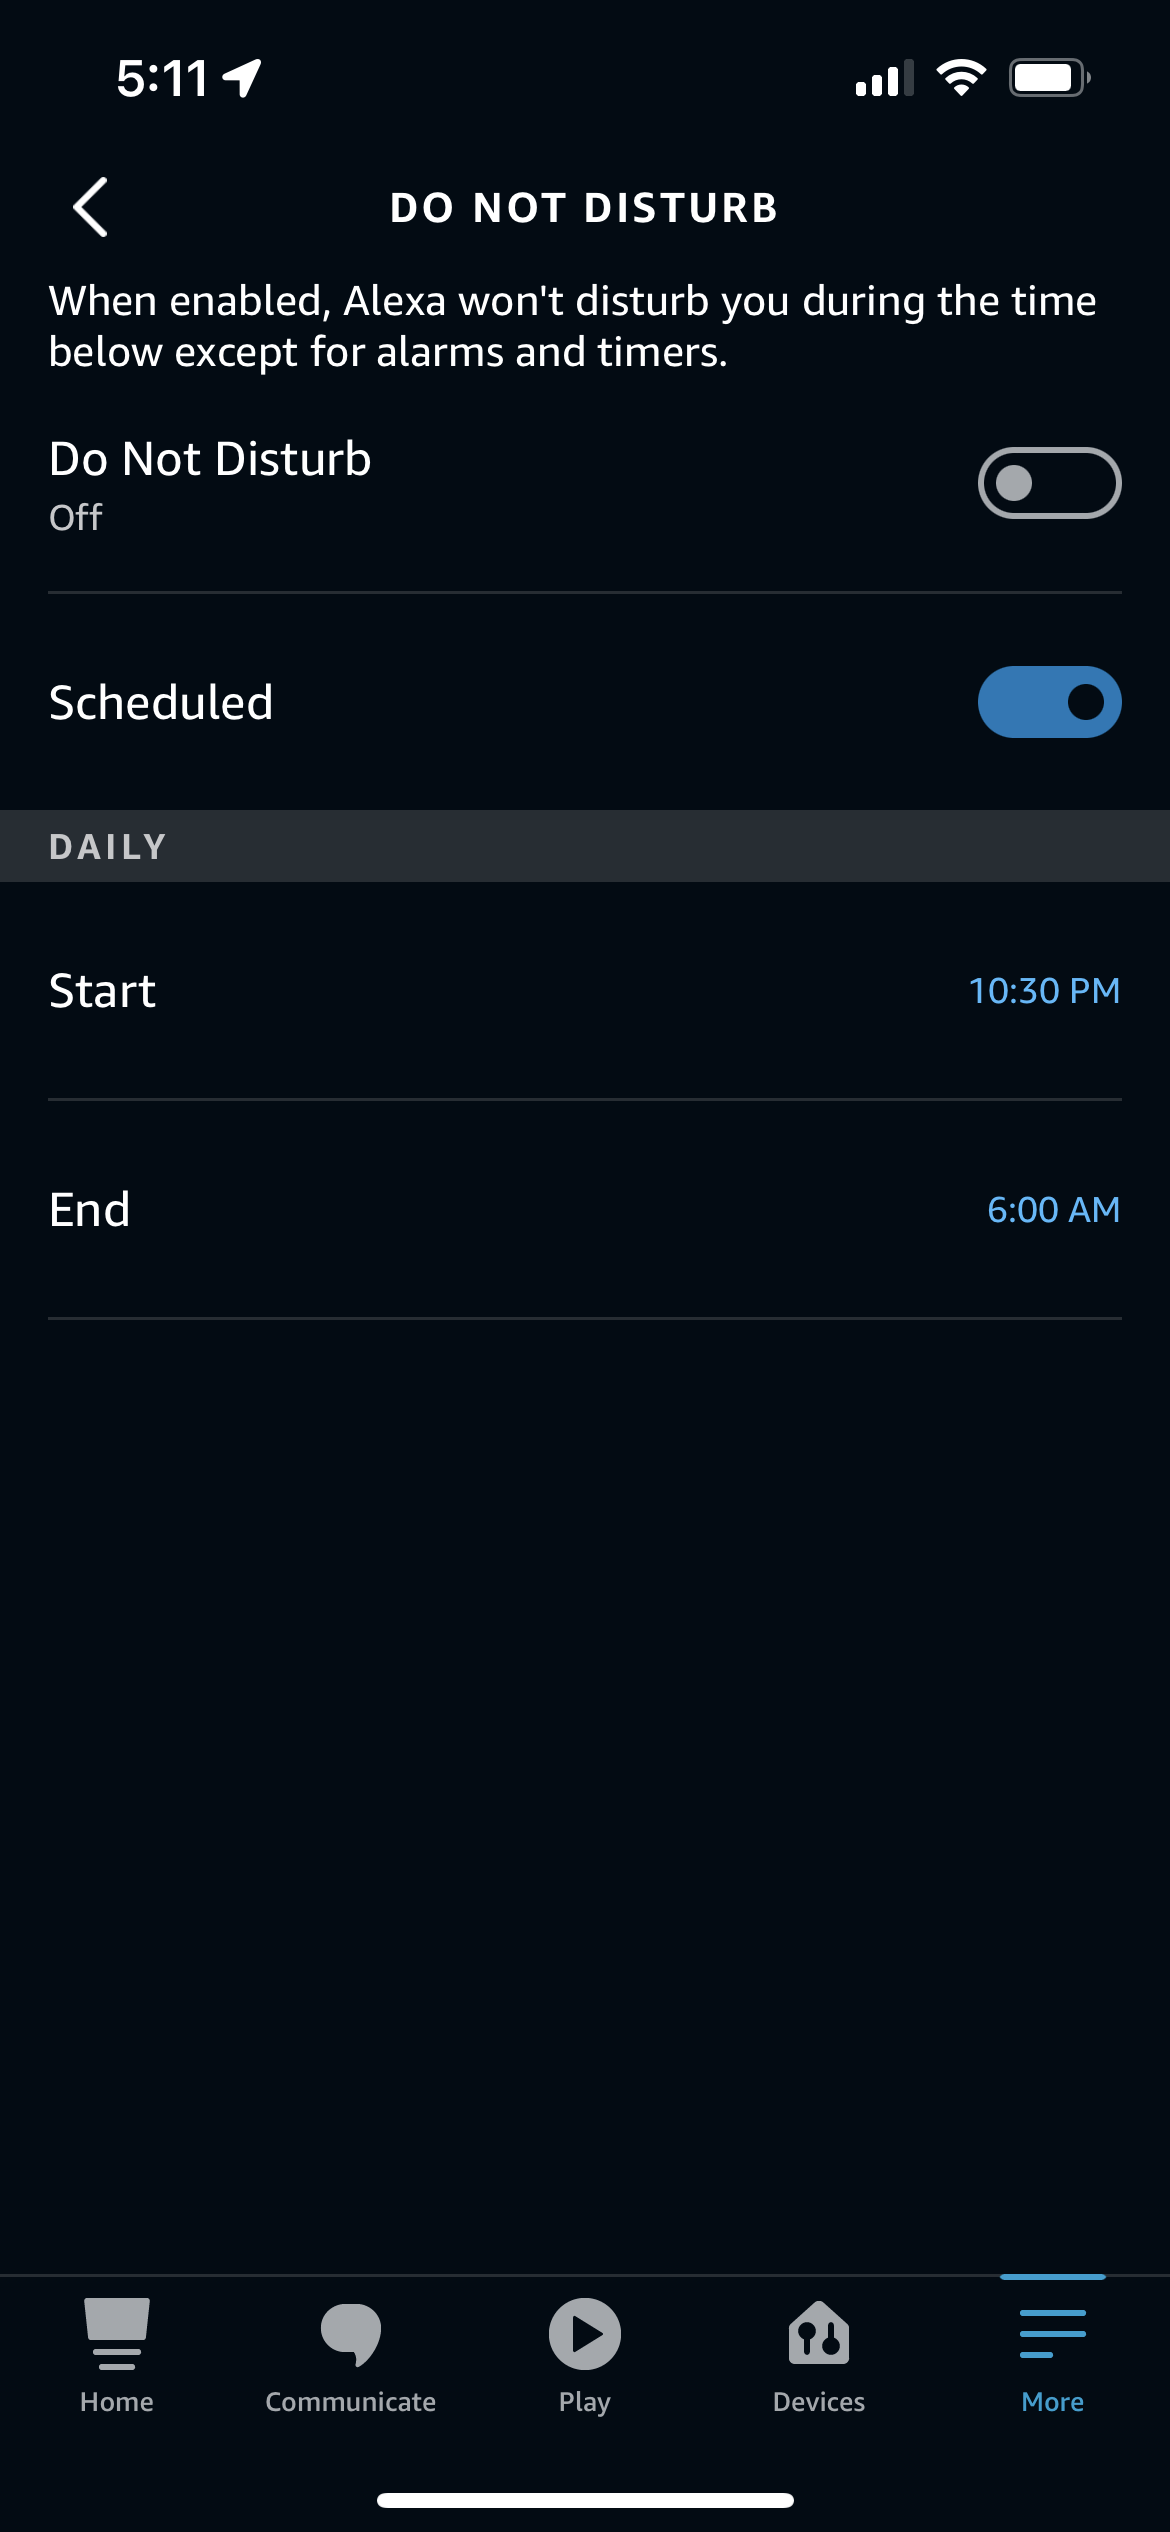 Do Not Disturb settings in the Alexa app